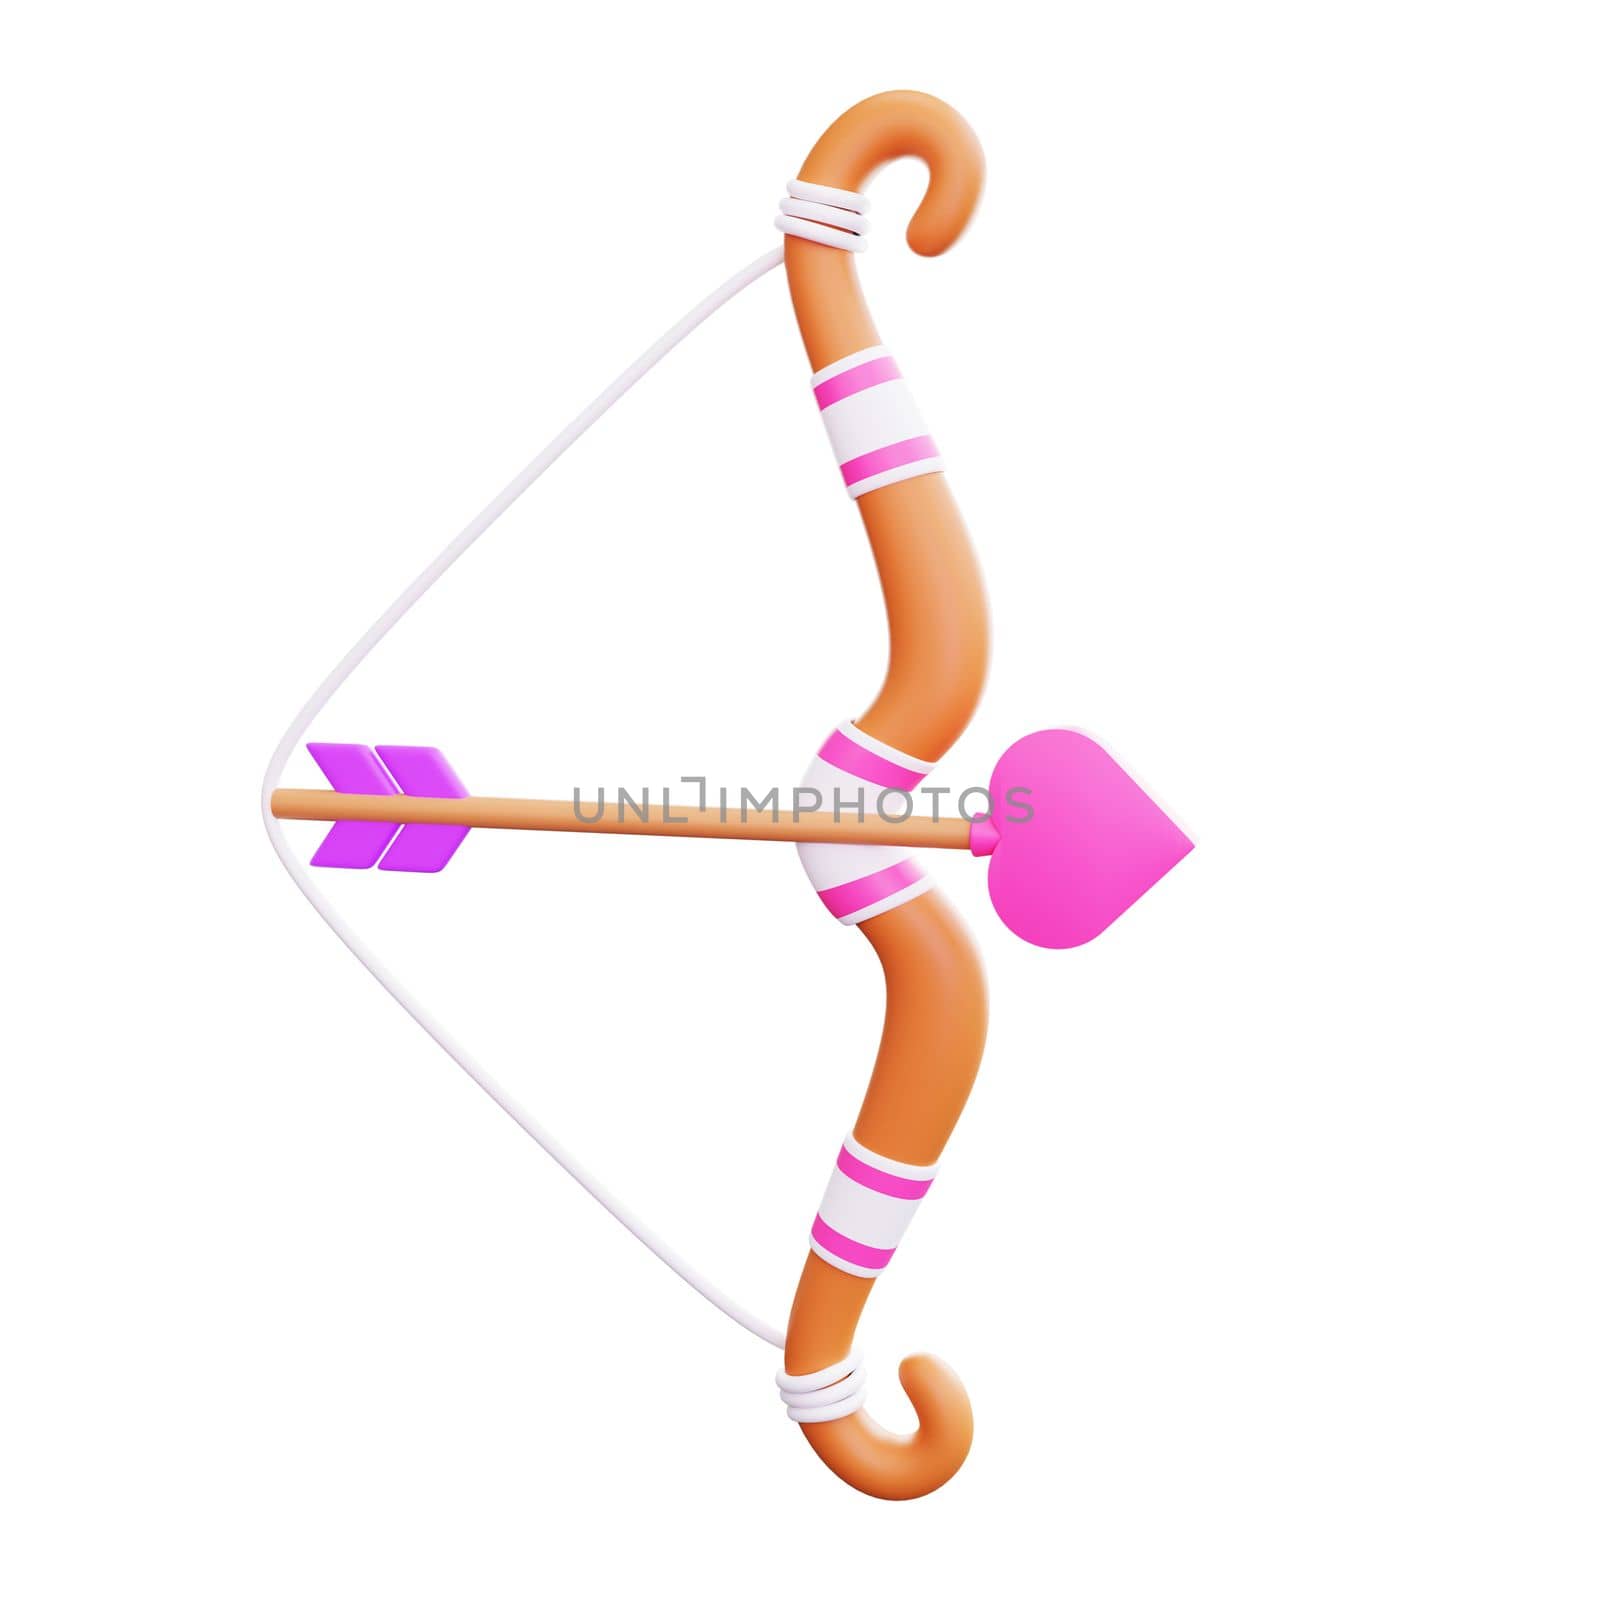 3d rendering of valentine's day arrow icon